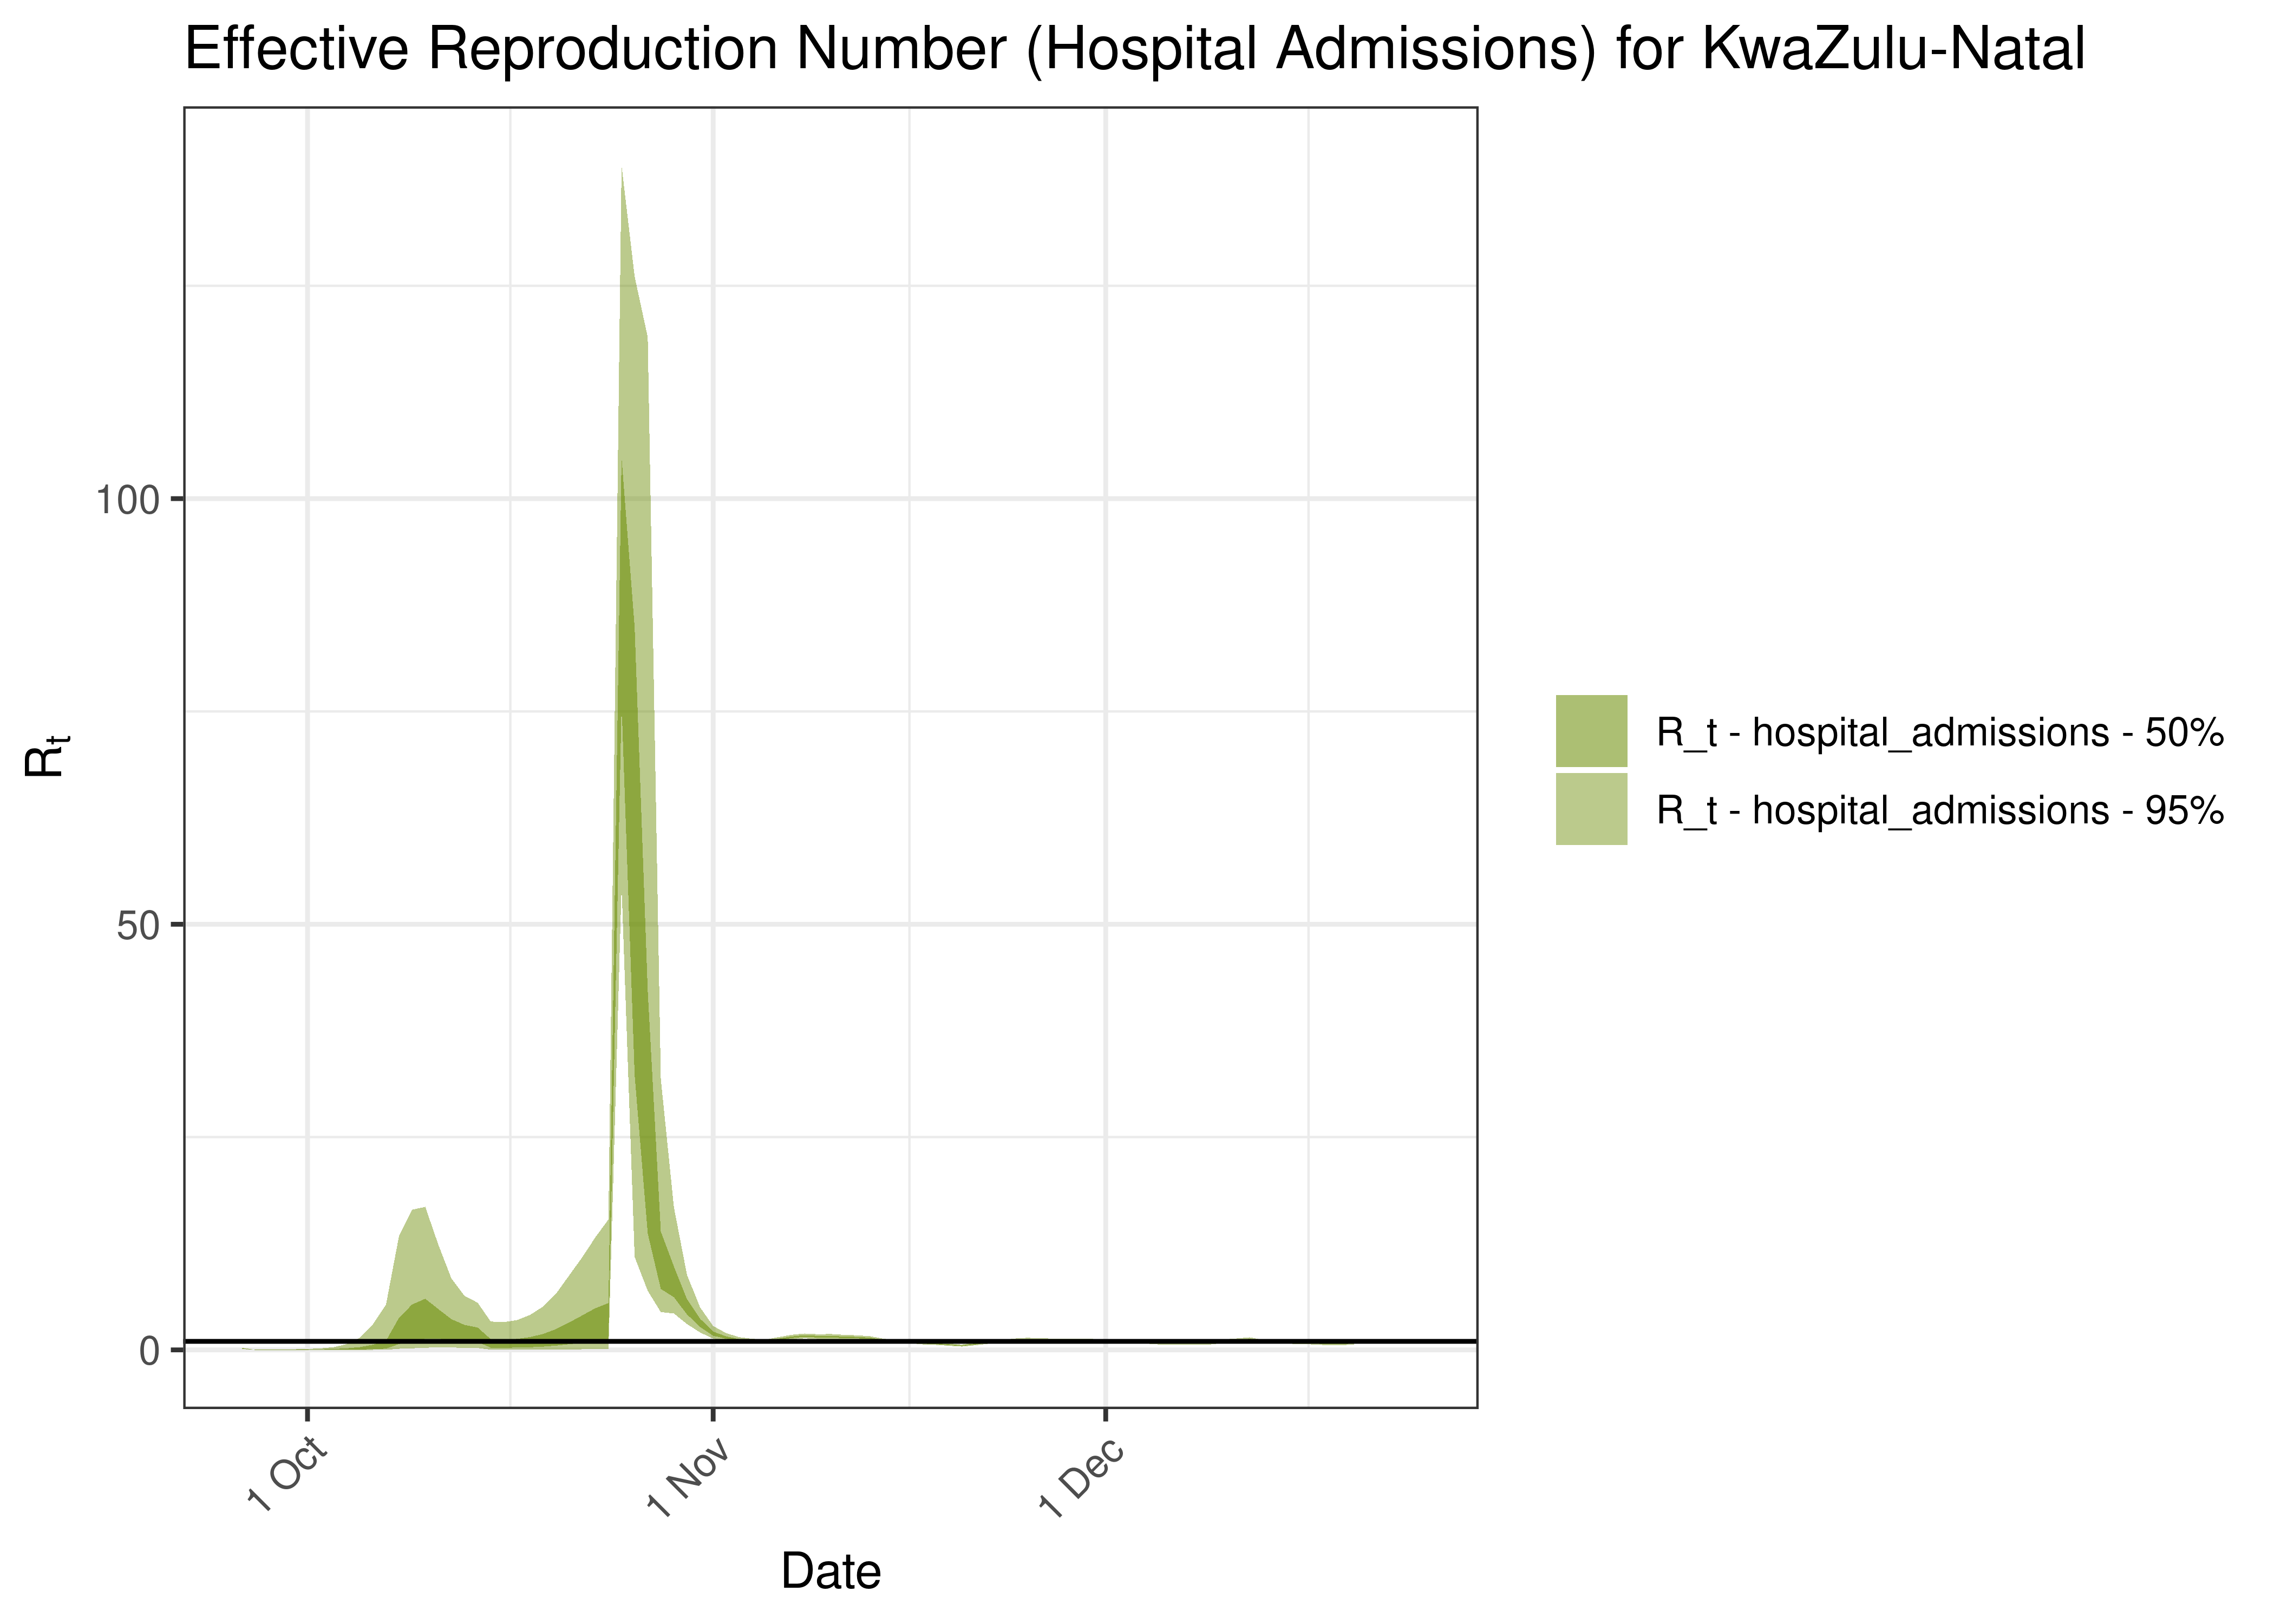 Estimated Effective Reproduction Number Based on Hospital Admissions for KwaZulu-Natal over last 90 days